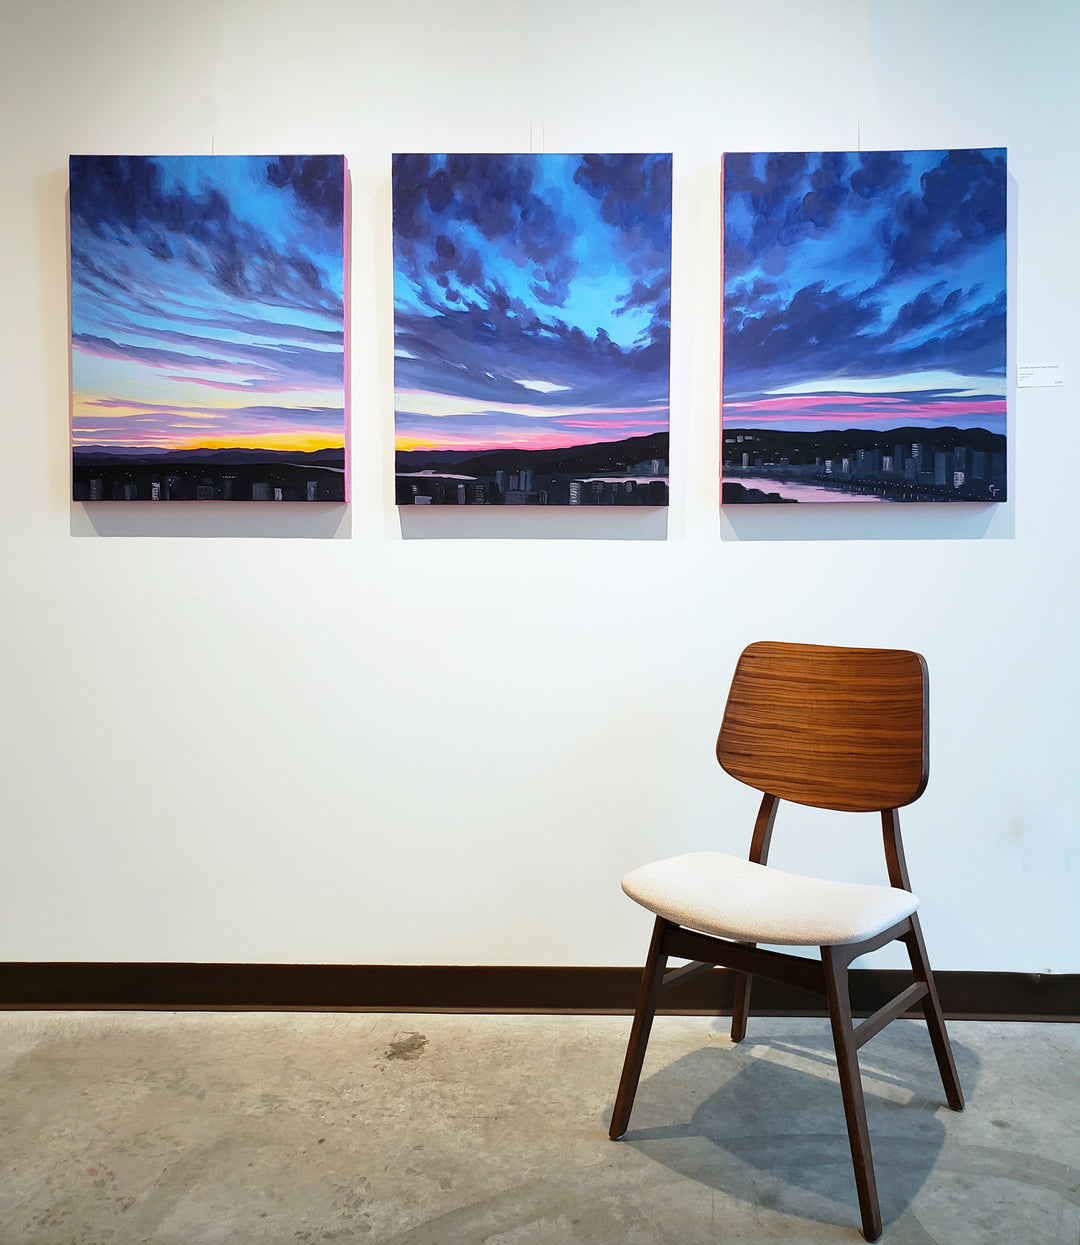 January Sunrise Over Portland - 24”x30” (x3) acrylic painting